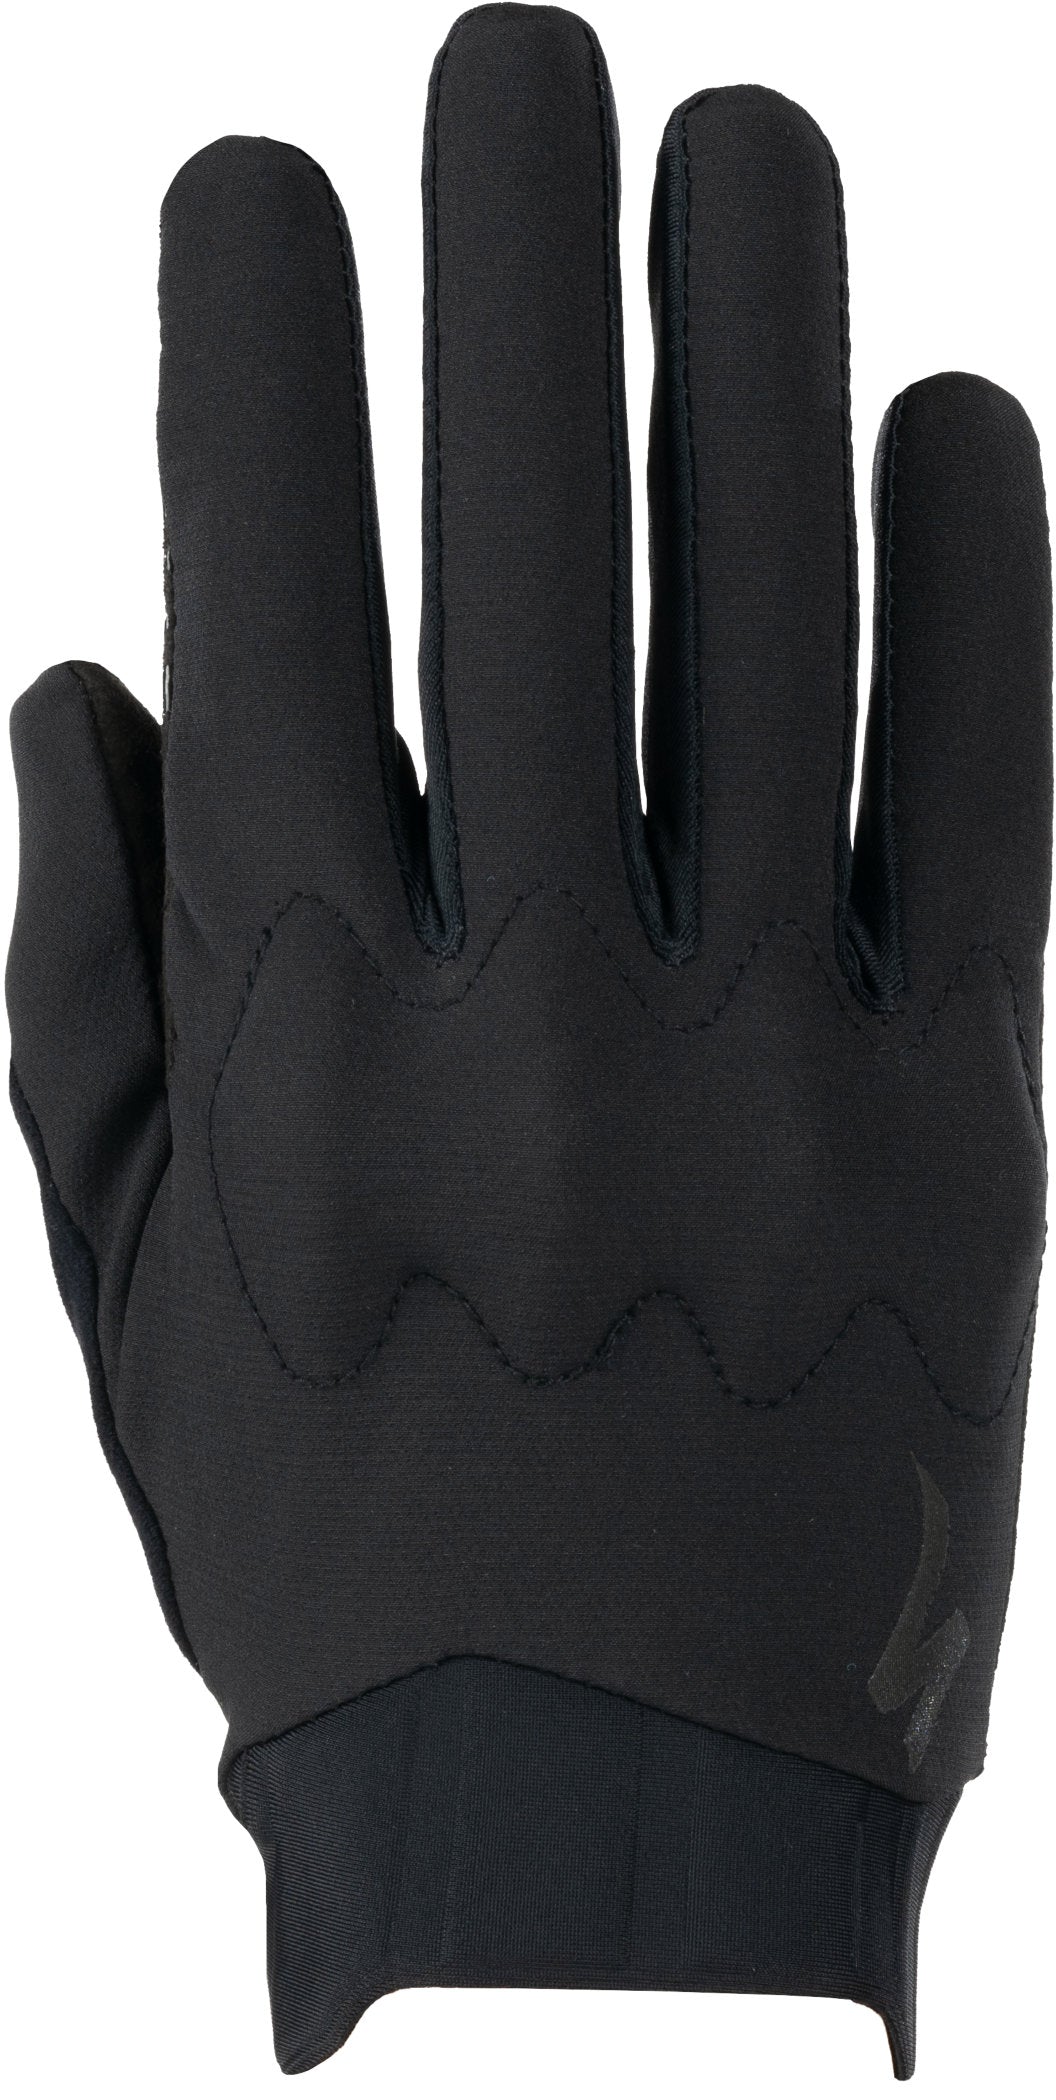 Specialized Women's Trail D3O Glove